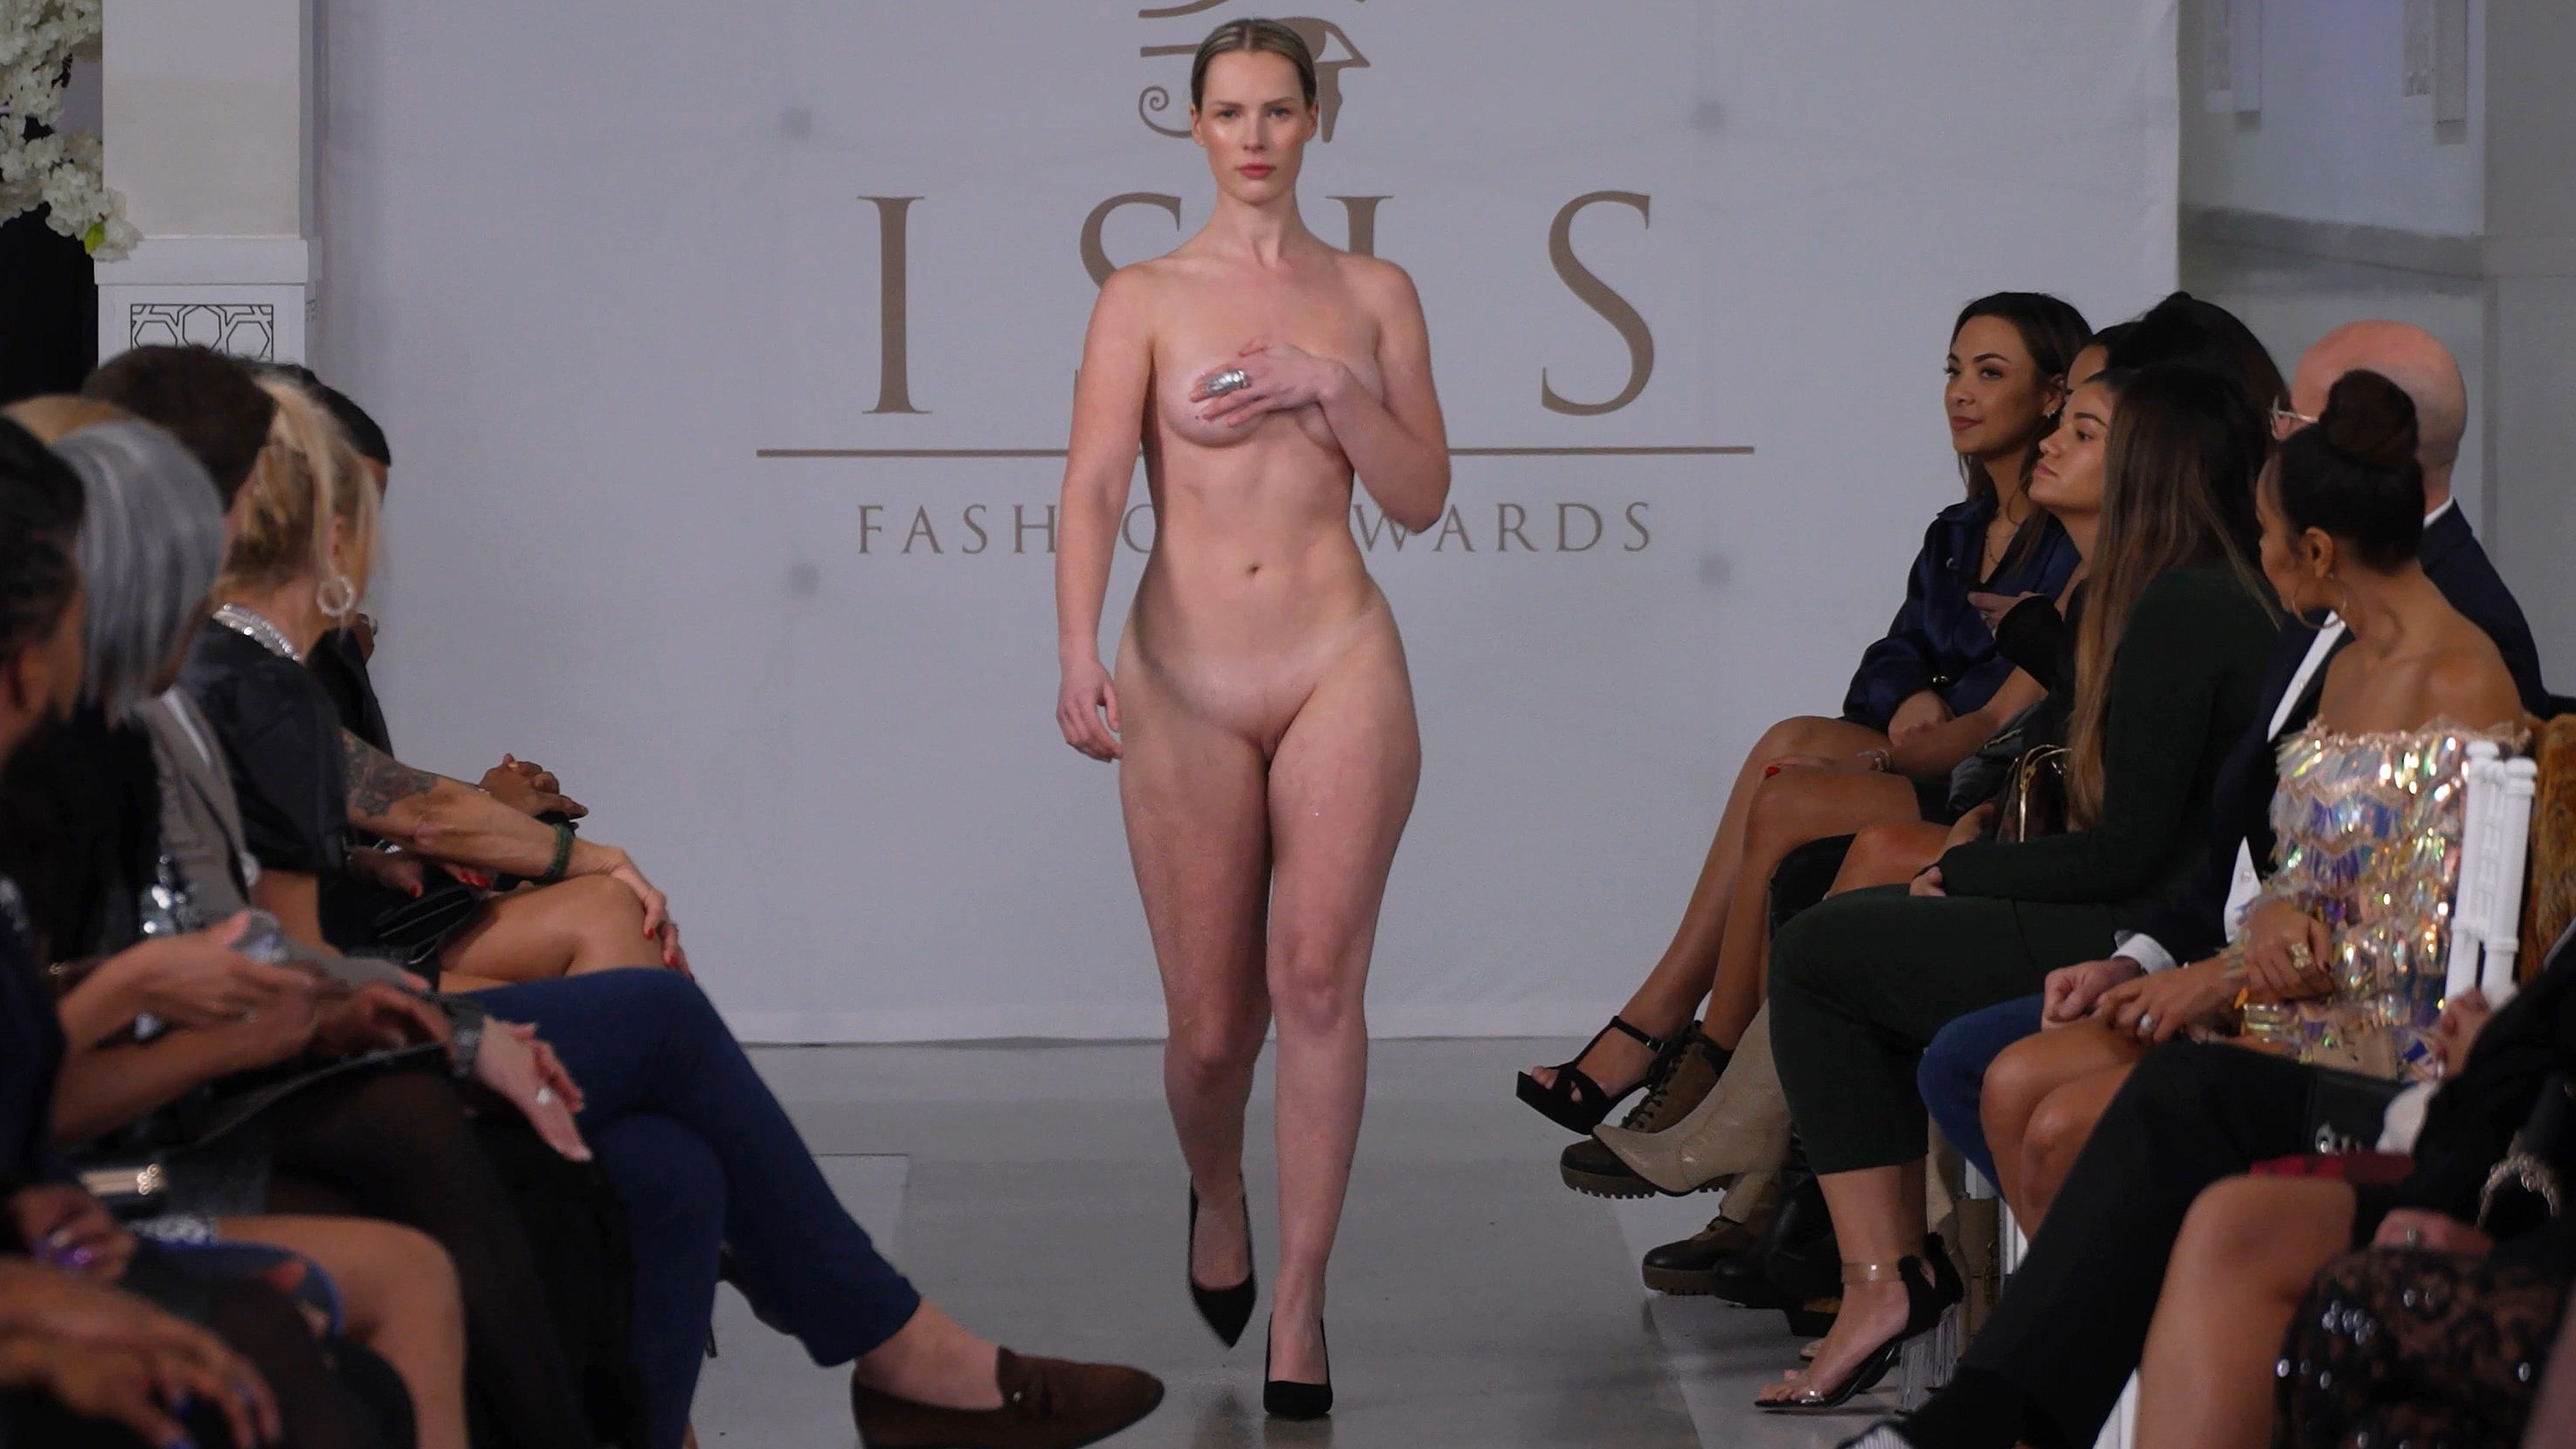 Latin Nude Model Fashion - Nude Models Fashion Show - Isis Fashion Awards - TV - ThisVid.com